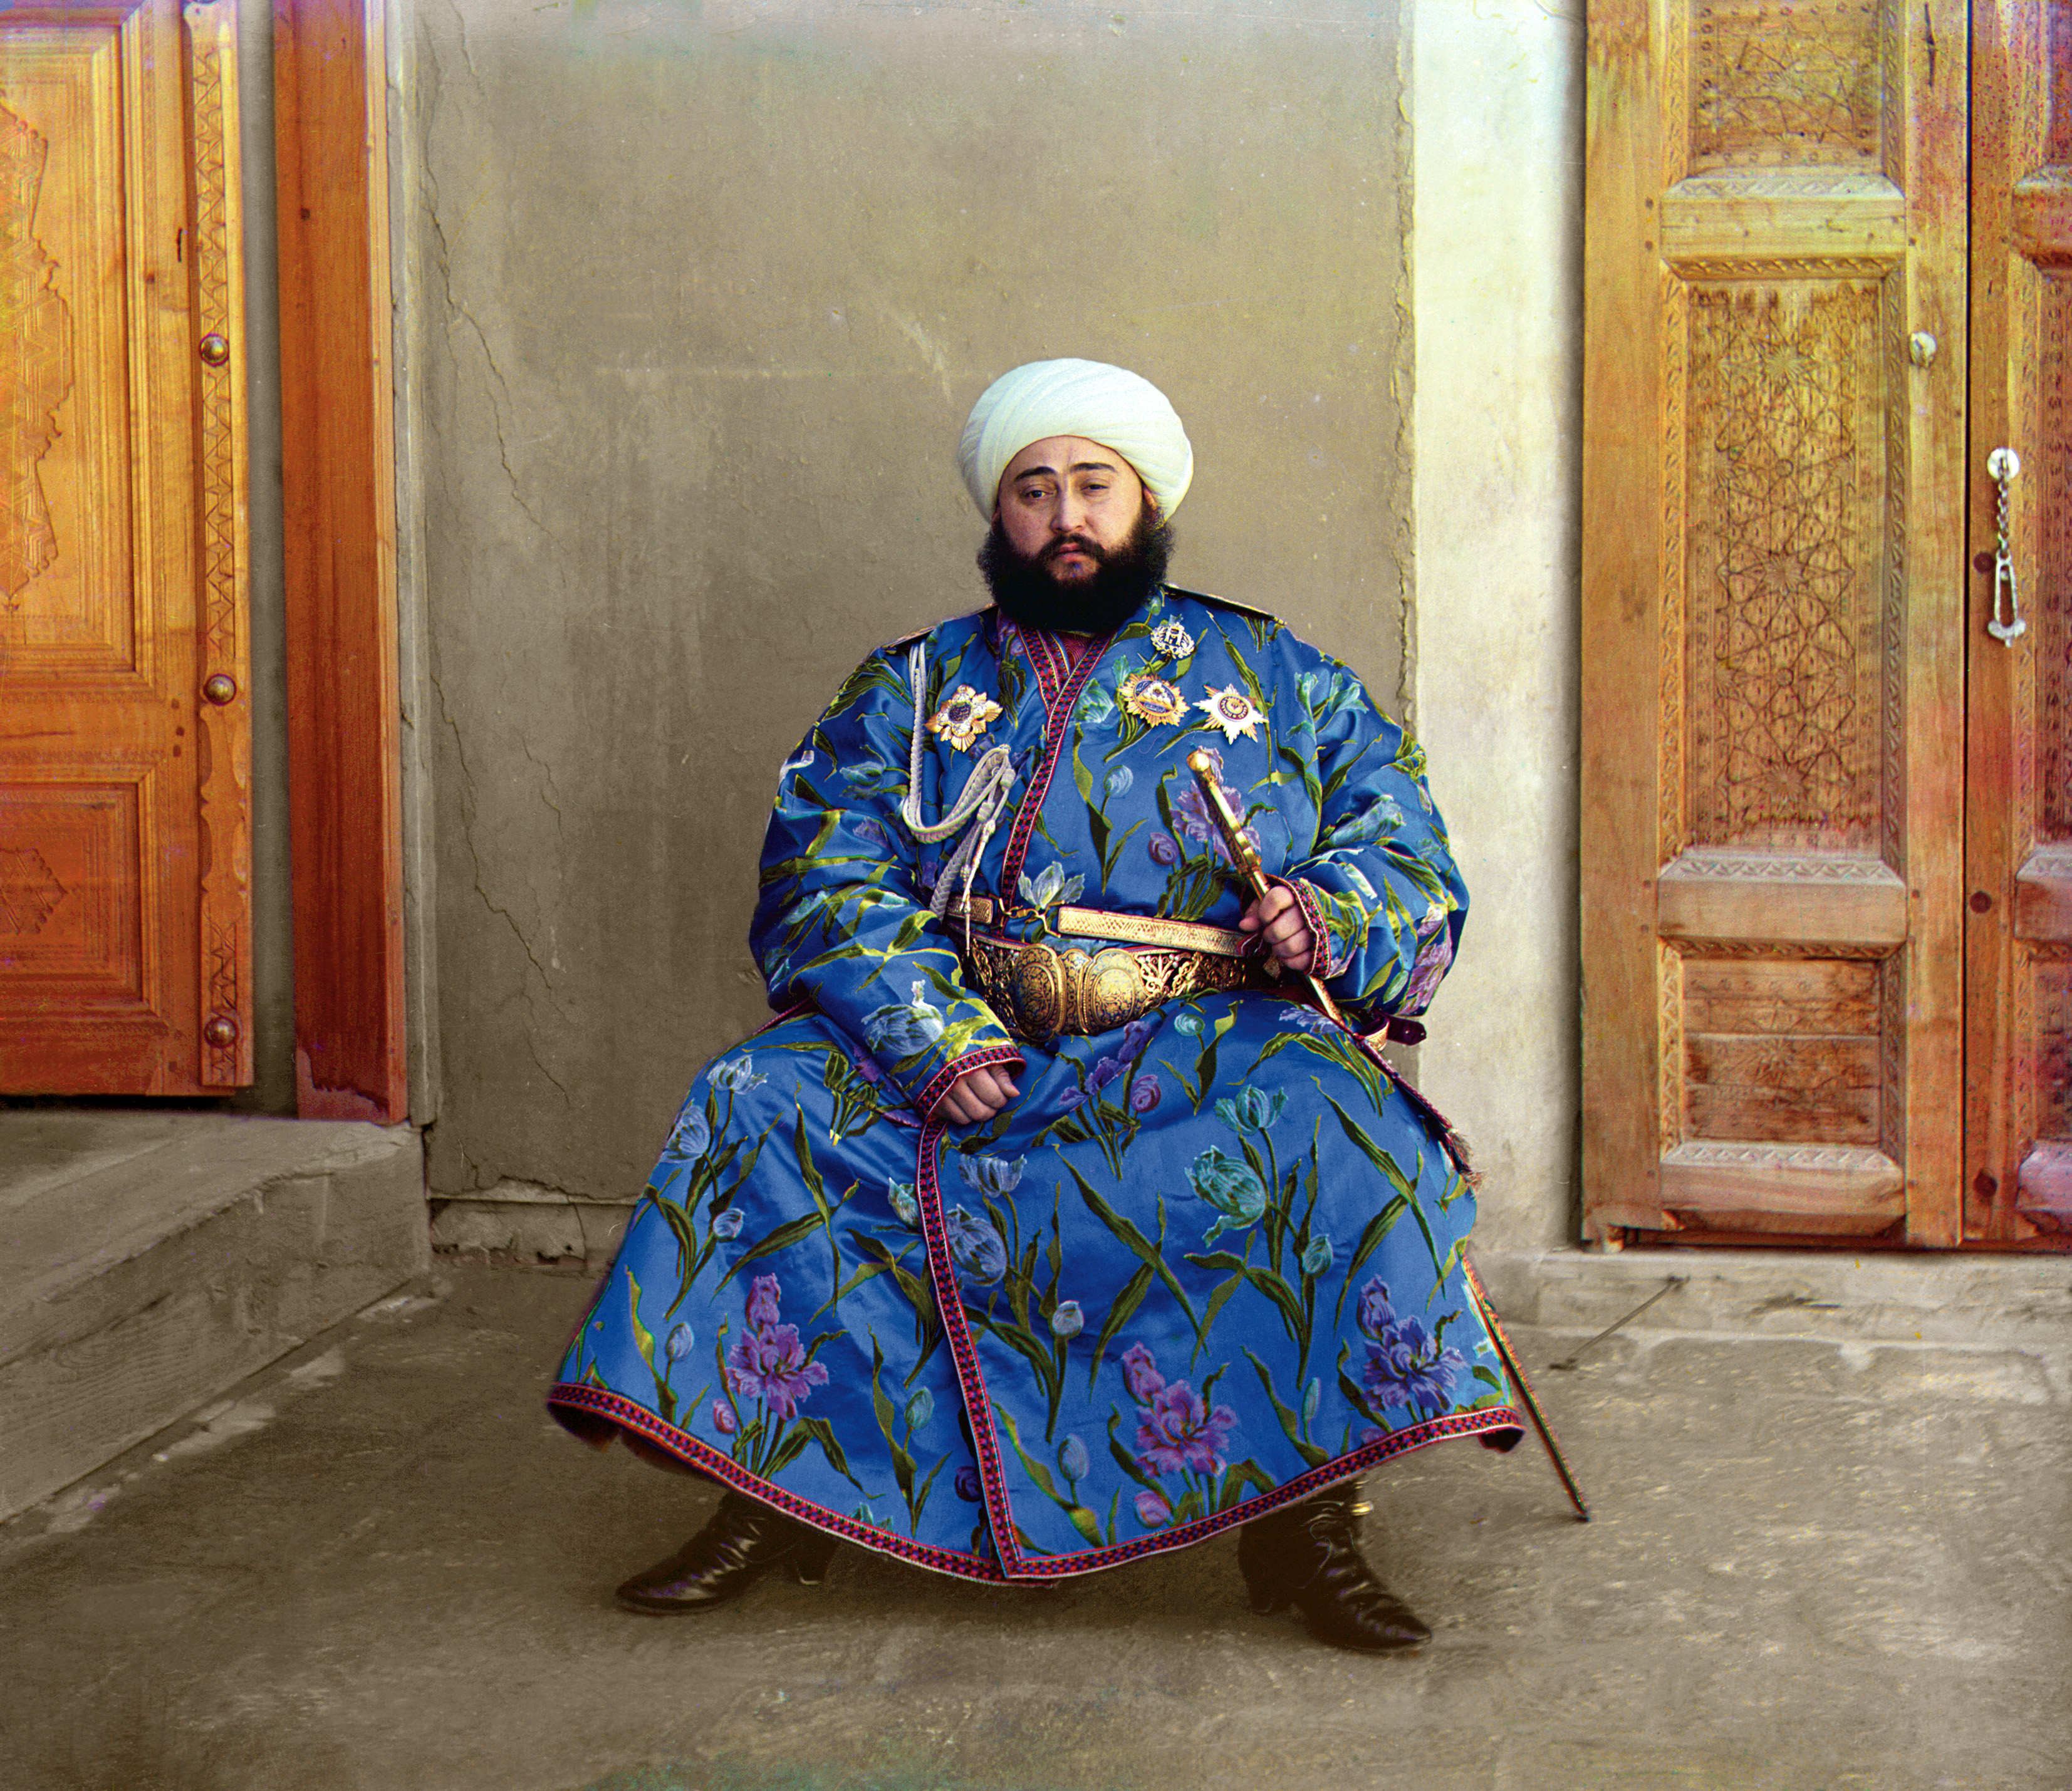 https://upload.wikimedia.org/wikipedia/commons/7/7d/Alim_Khan_%281880%E2%80%931944%29%2C_Emir_of_Bukhara%2C_photographed_by_S.M._Prokudin-Gorskiy_in_1911.jpg